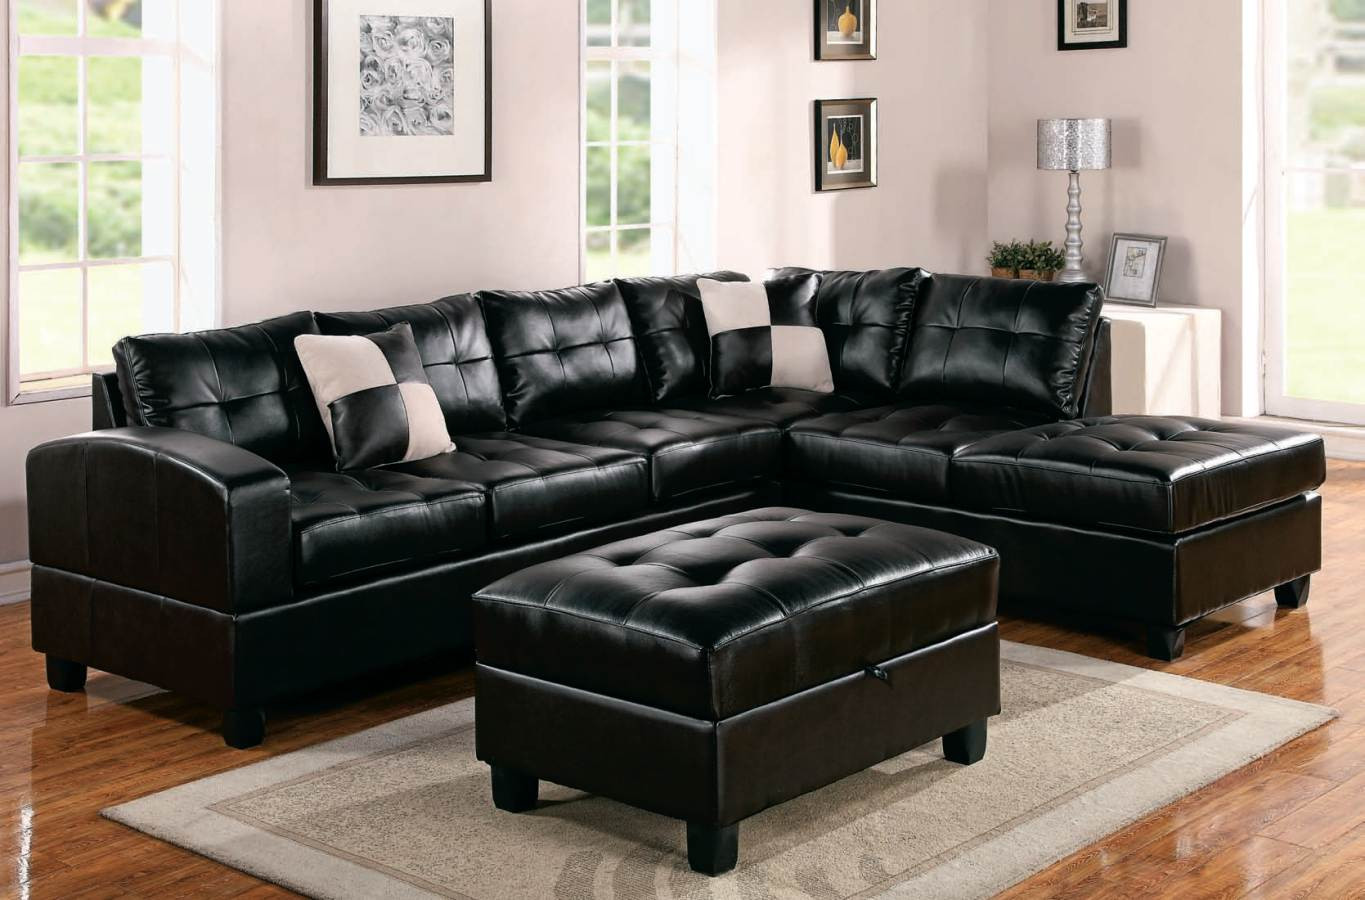 Black Sofa Living Room Ideas
 Decorating a Room with Black Leather Sofa Traba Homes